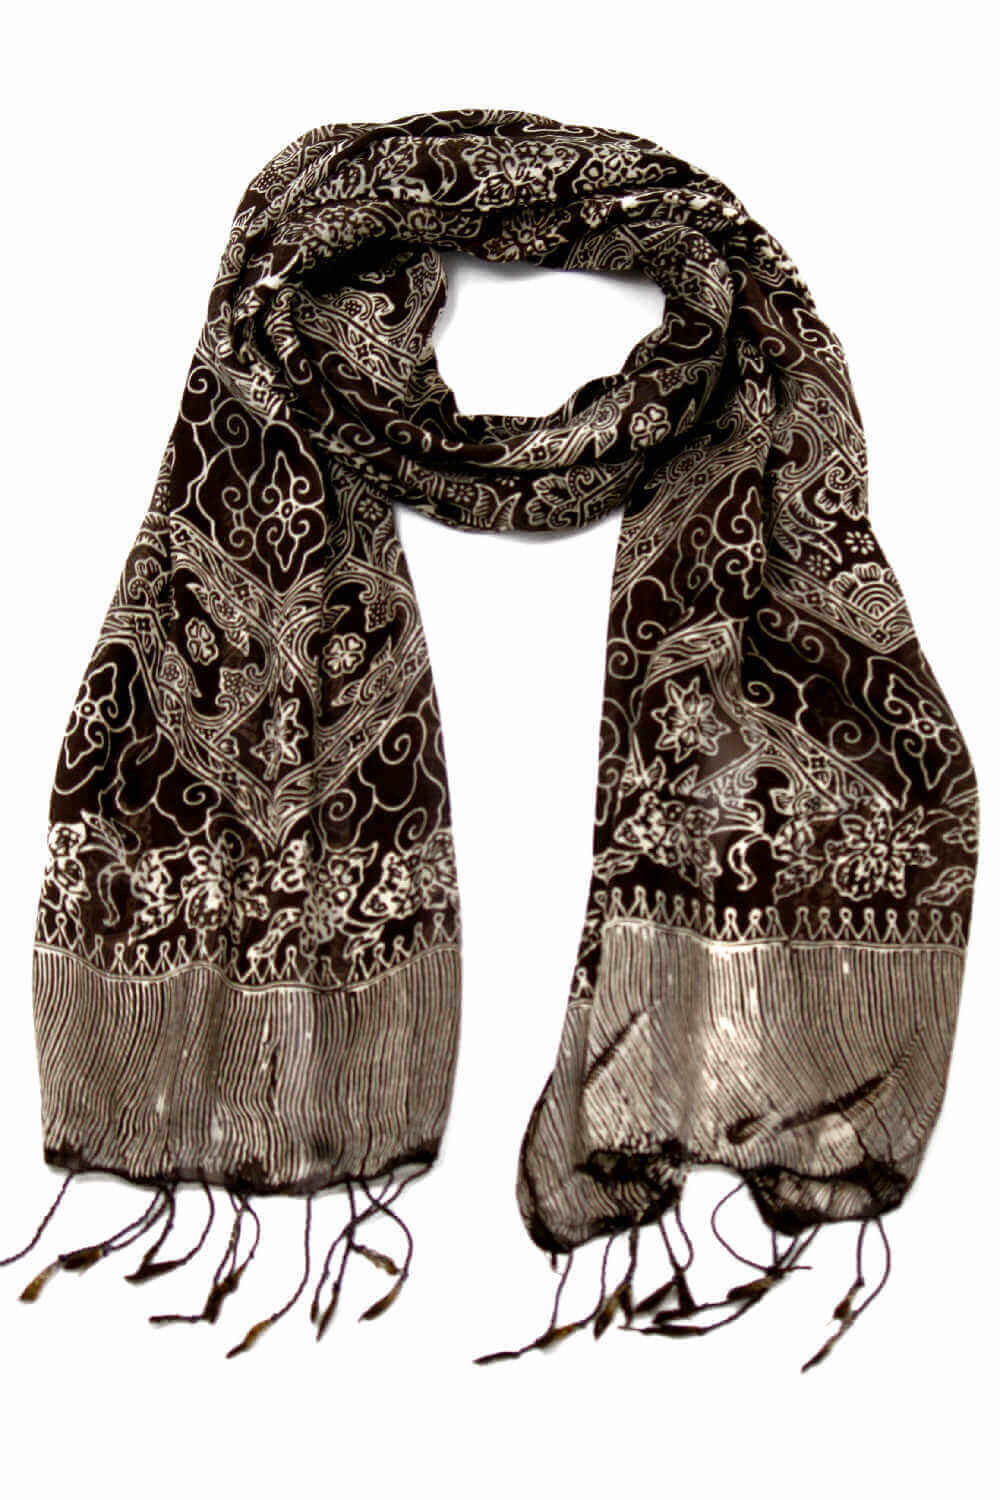 silk-scarf-floral-design-chocolate-brown